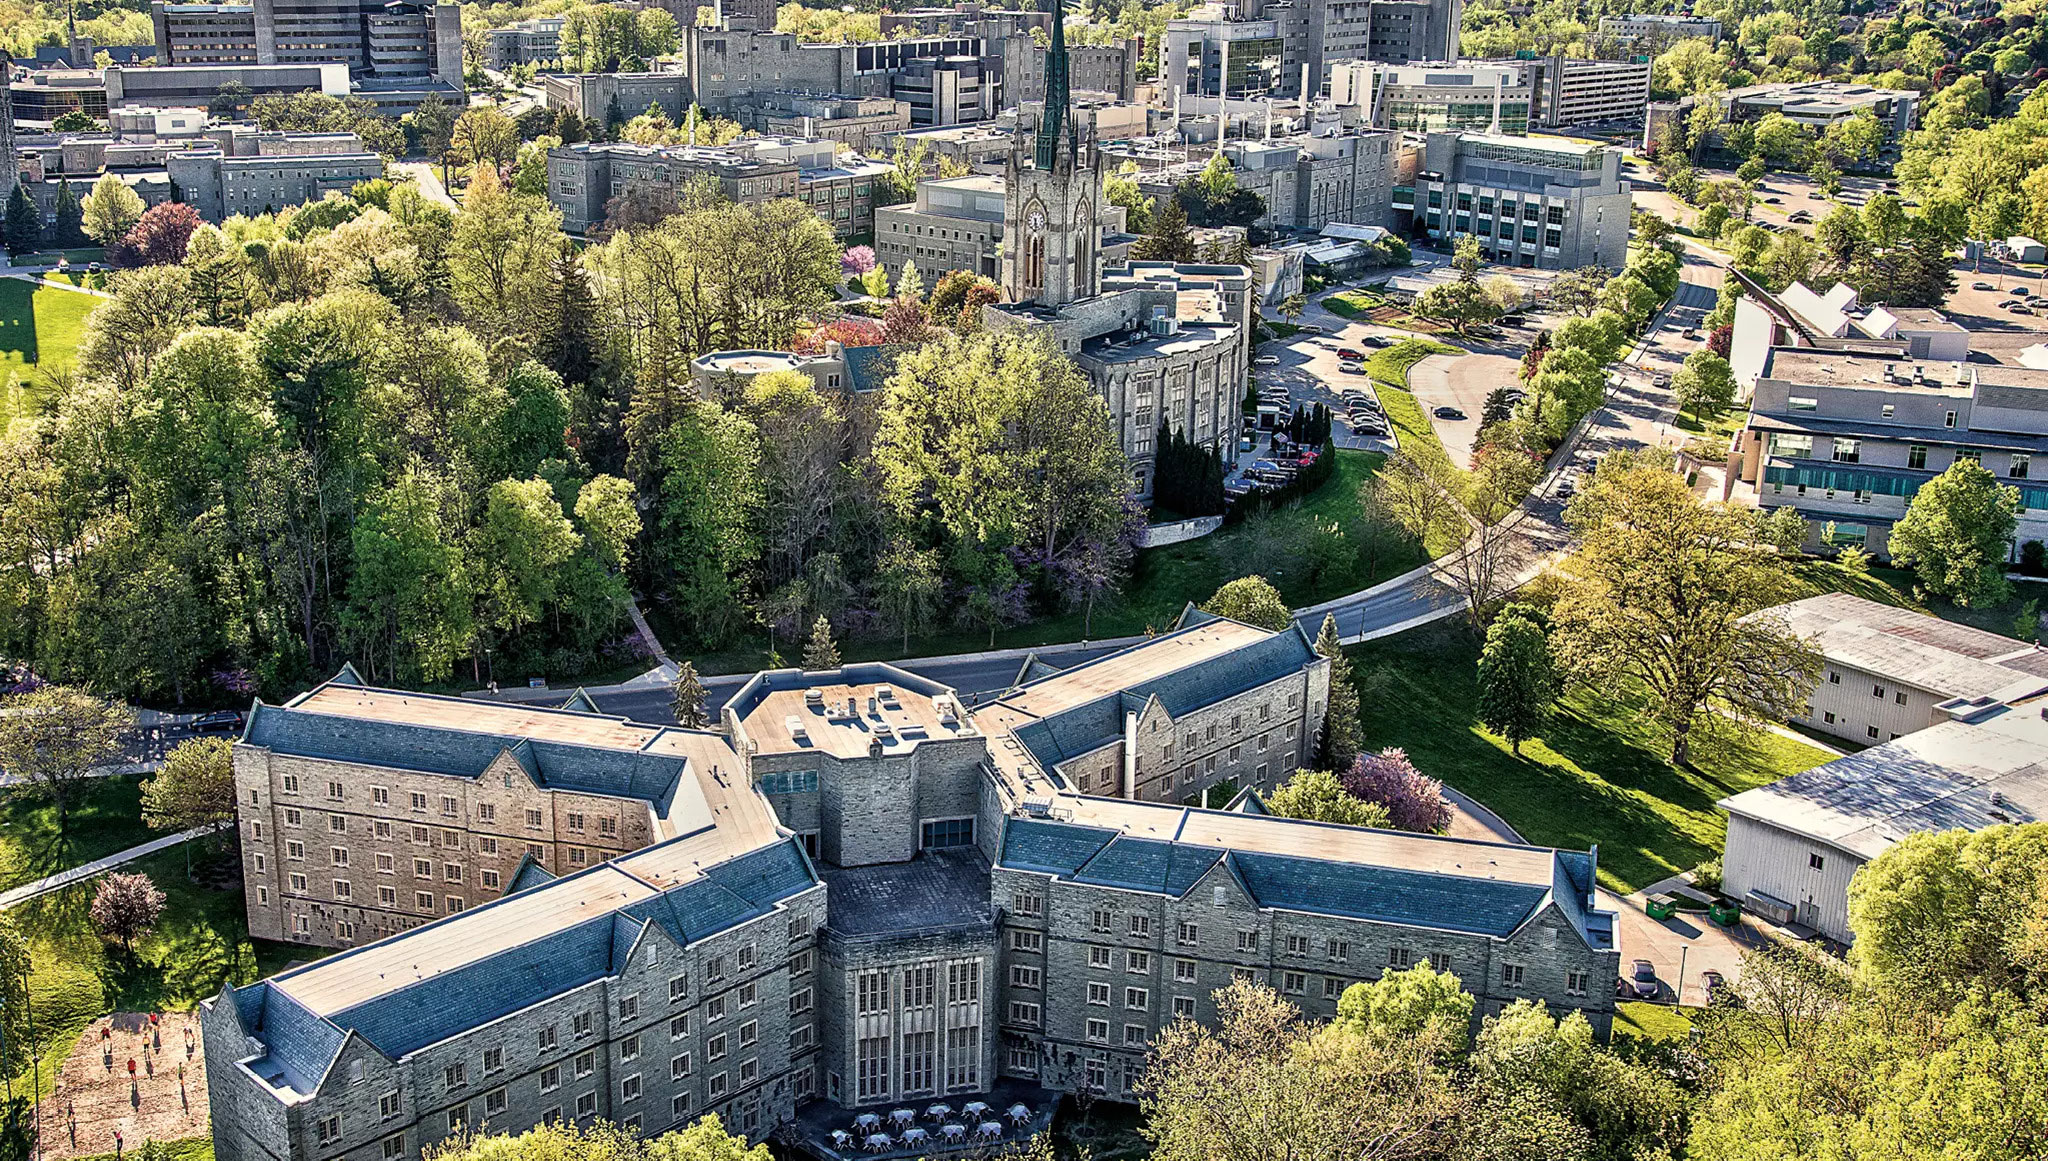 University Campus at University of Western Ontario